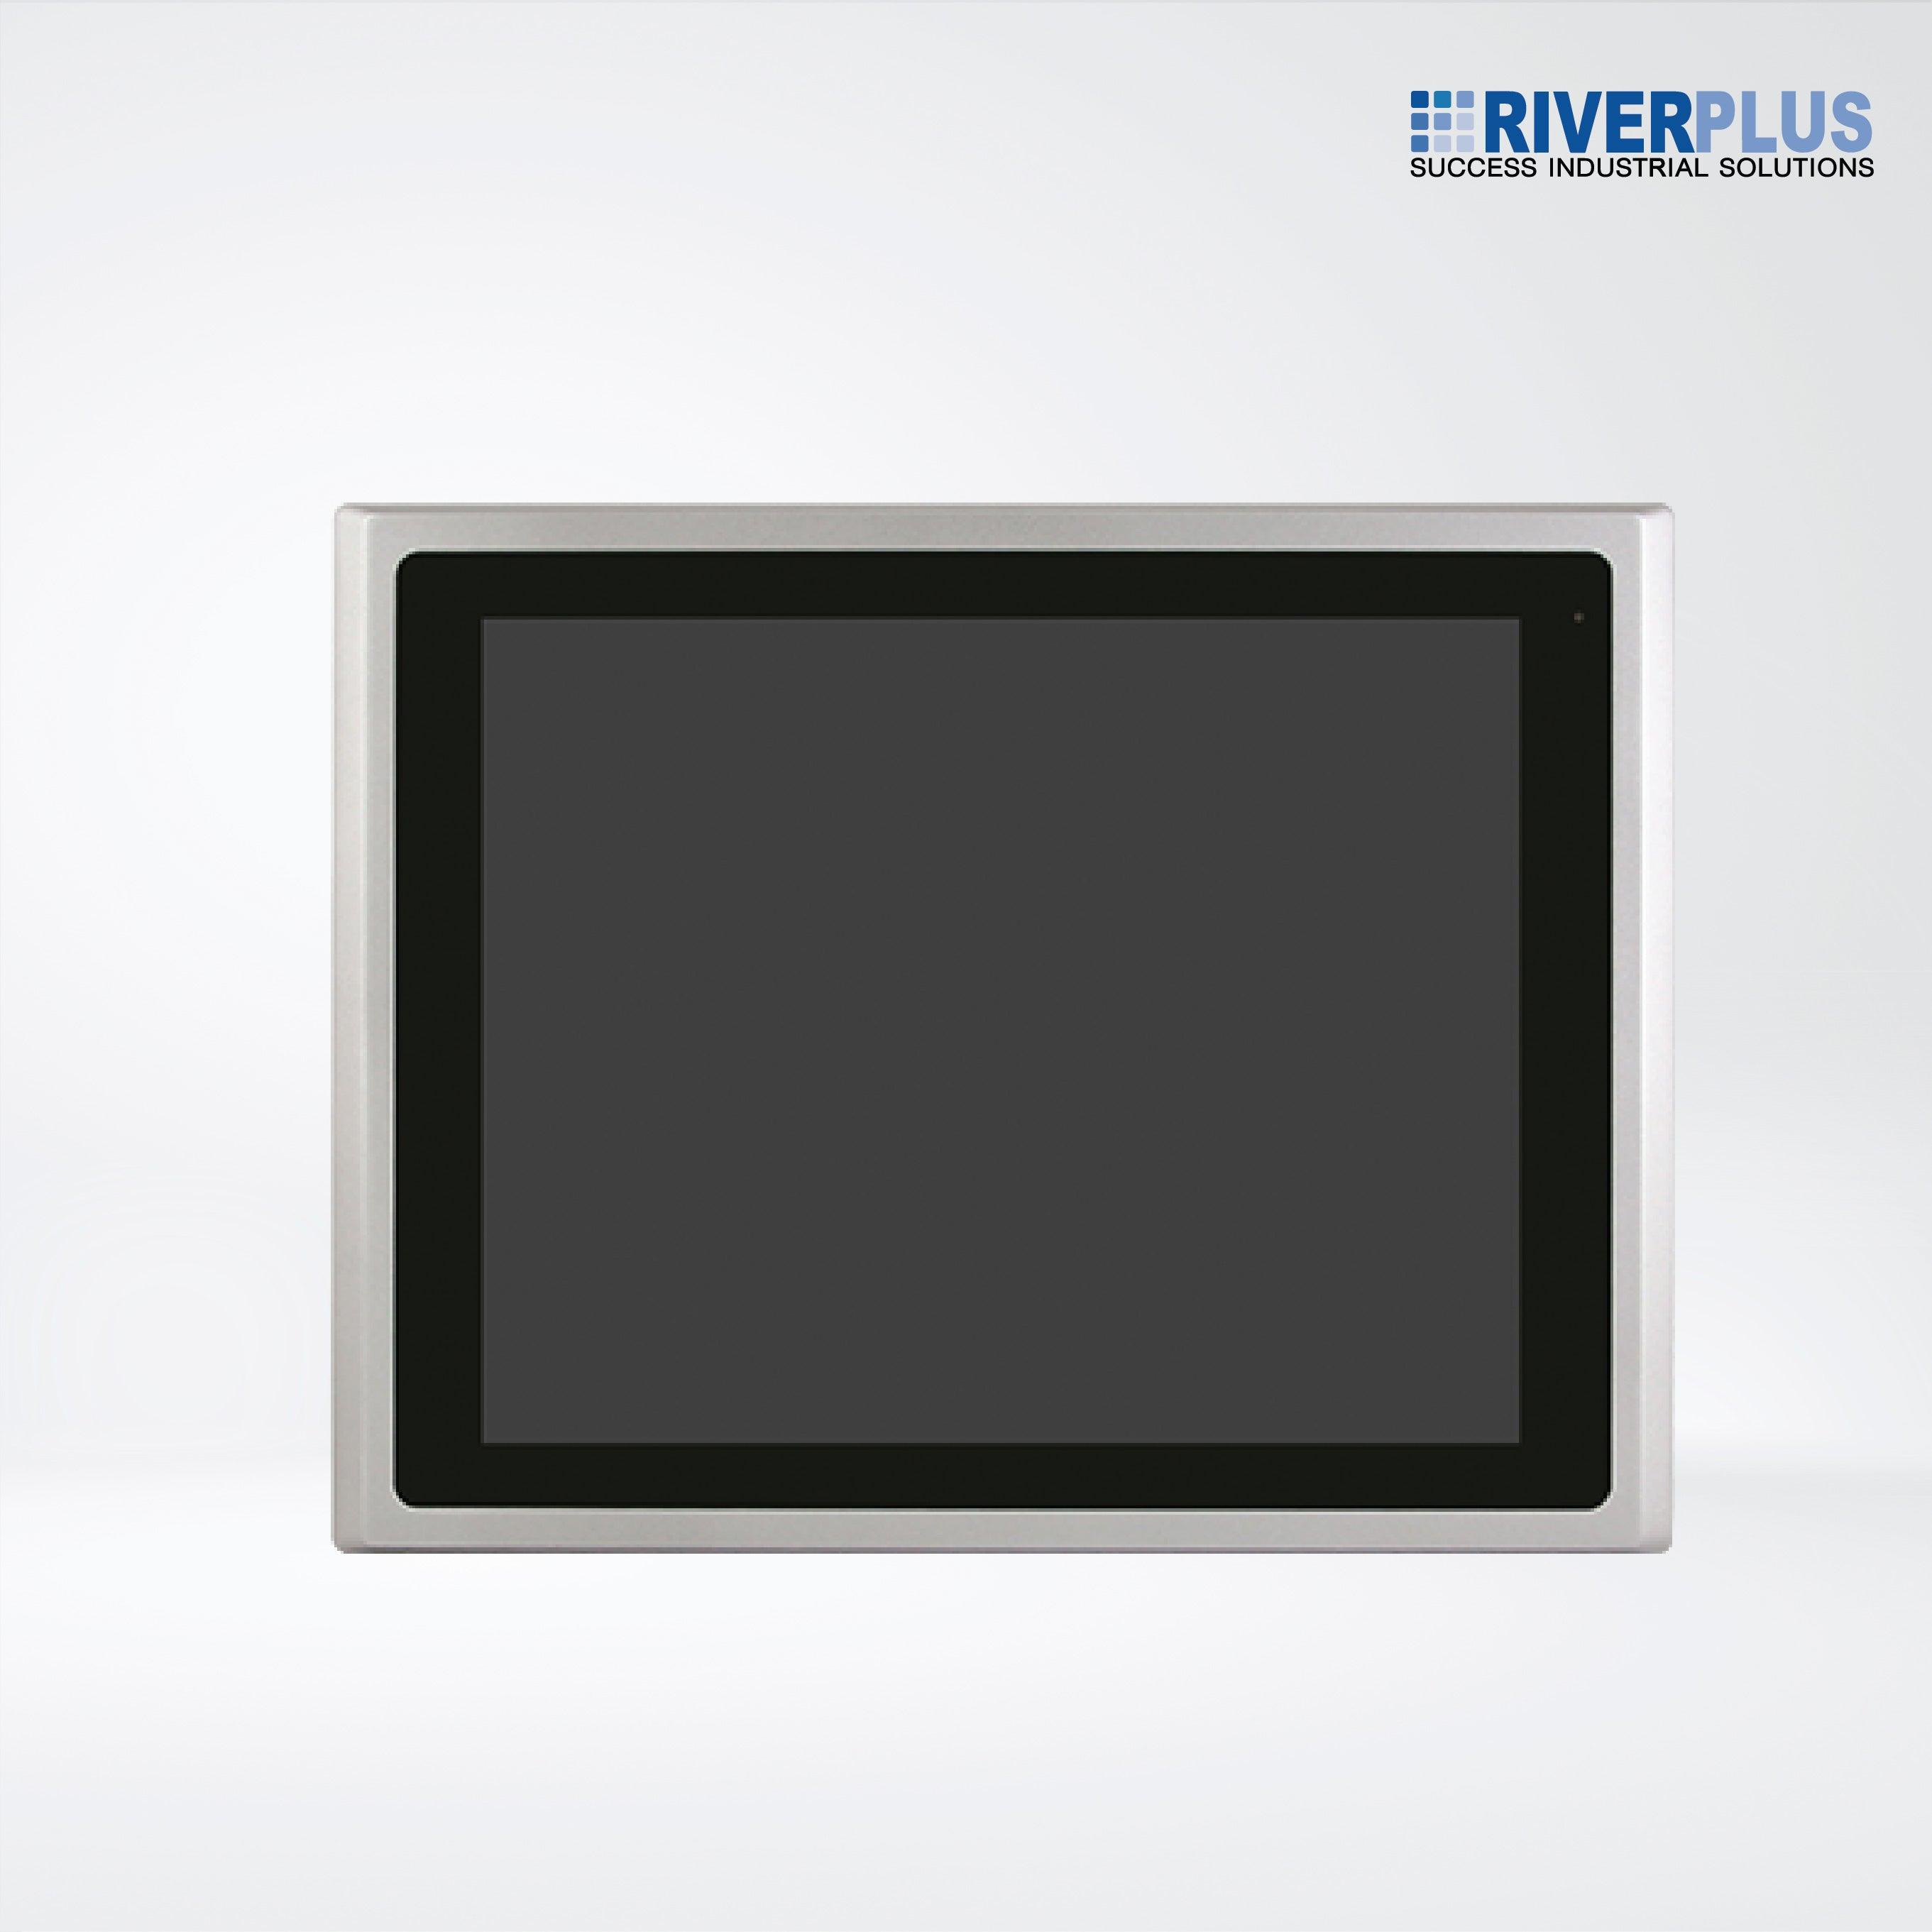 ARCHMI-817 17" Intel Celeron N2930/ Atom E3845, Fanless Industrial Compact Size Panel PC - Riverplus